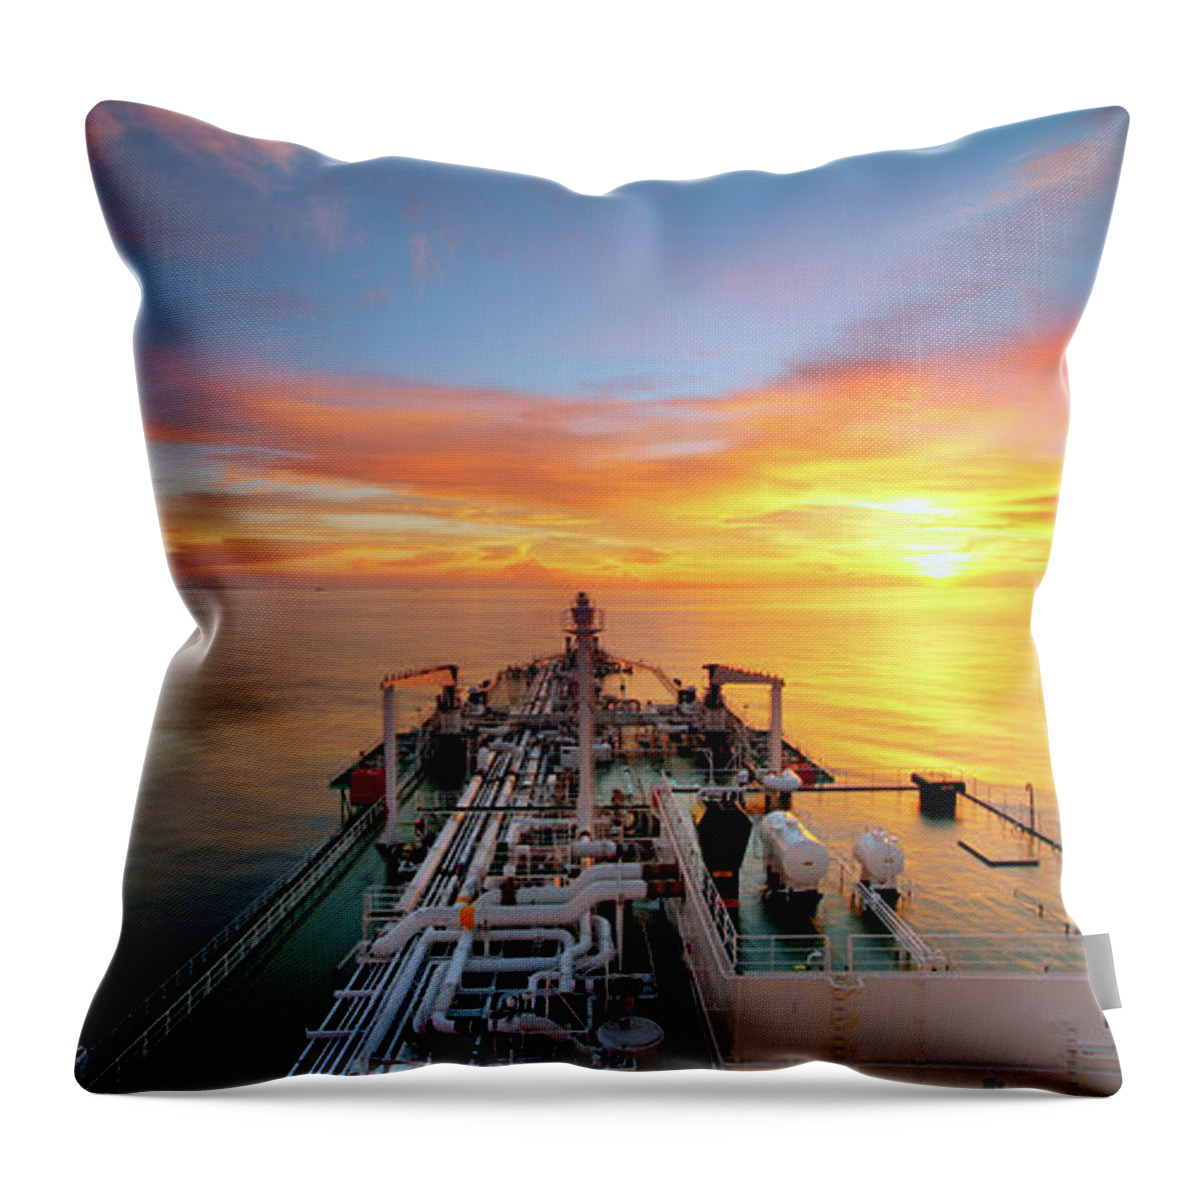 Tranquility Throw Pillow featuring the photograph Sunset At Bintulu, Sarawak by Mohd Jerald Pinto